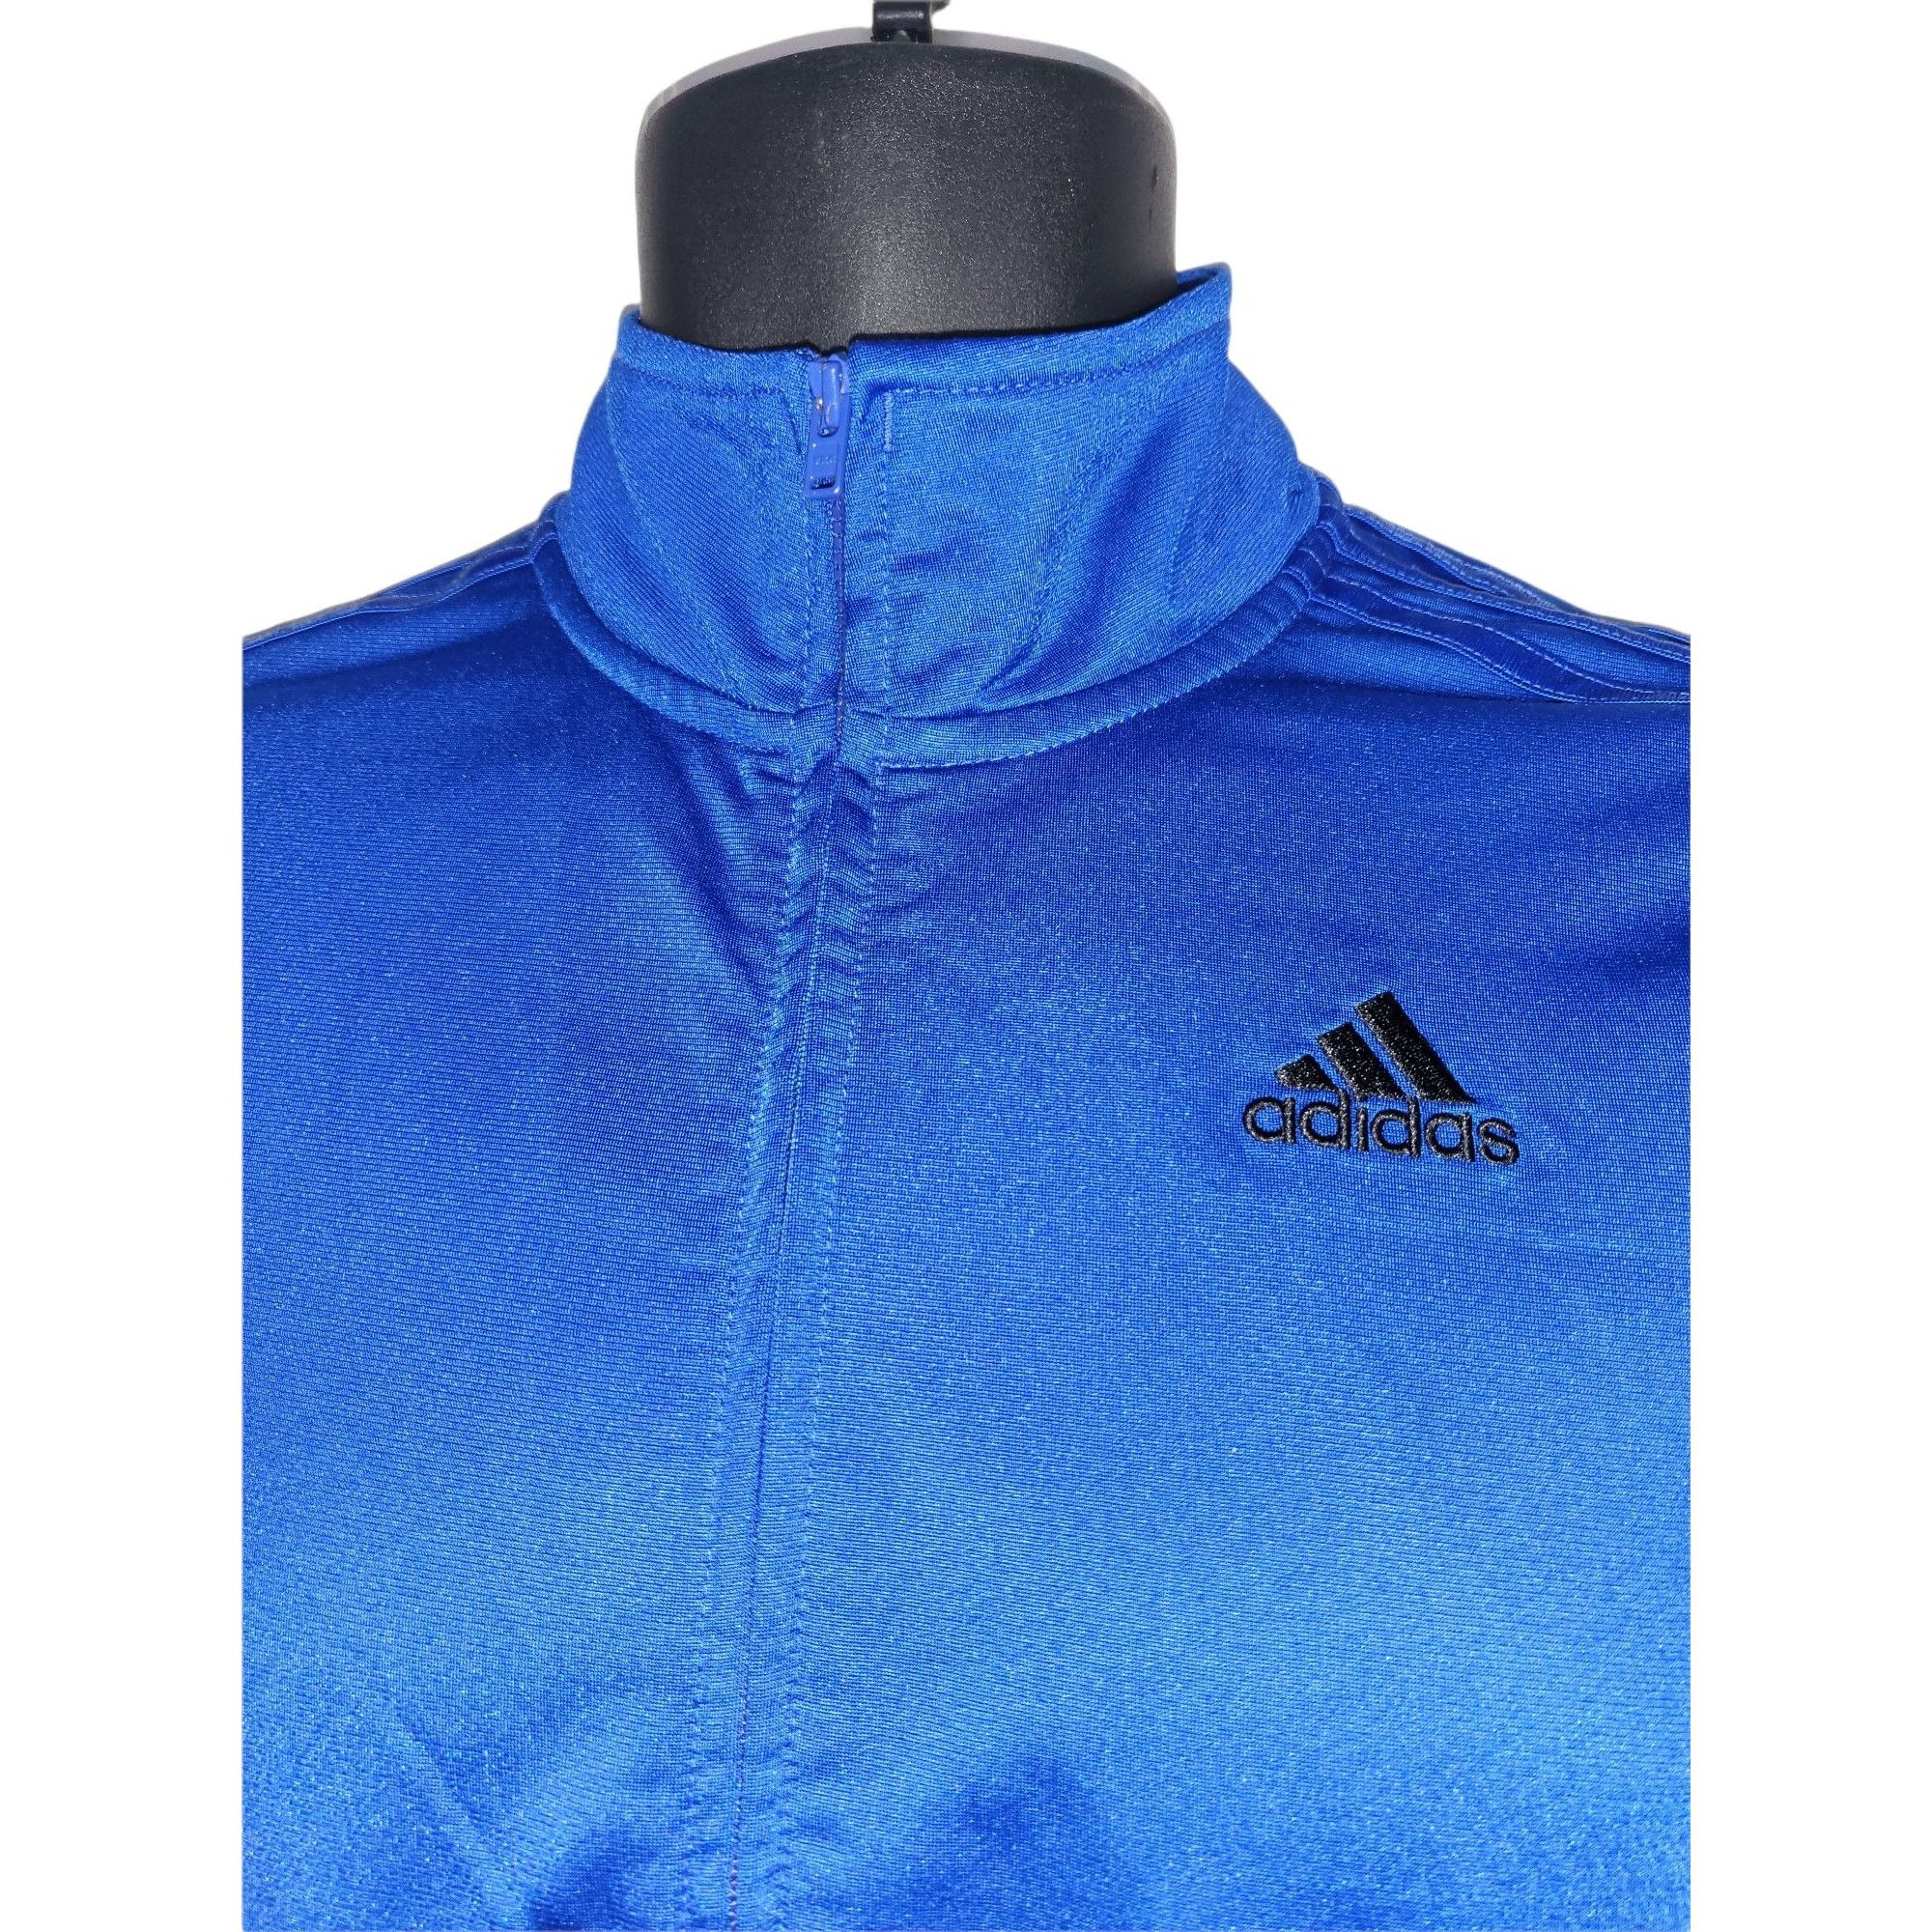 Adidas Adidas Blue Long Sleeve Striped Sz XL 18 / 20 Track Jacket W Size XL / US 12-14 / IT 48-50 - 2 Preview